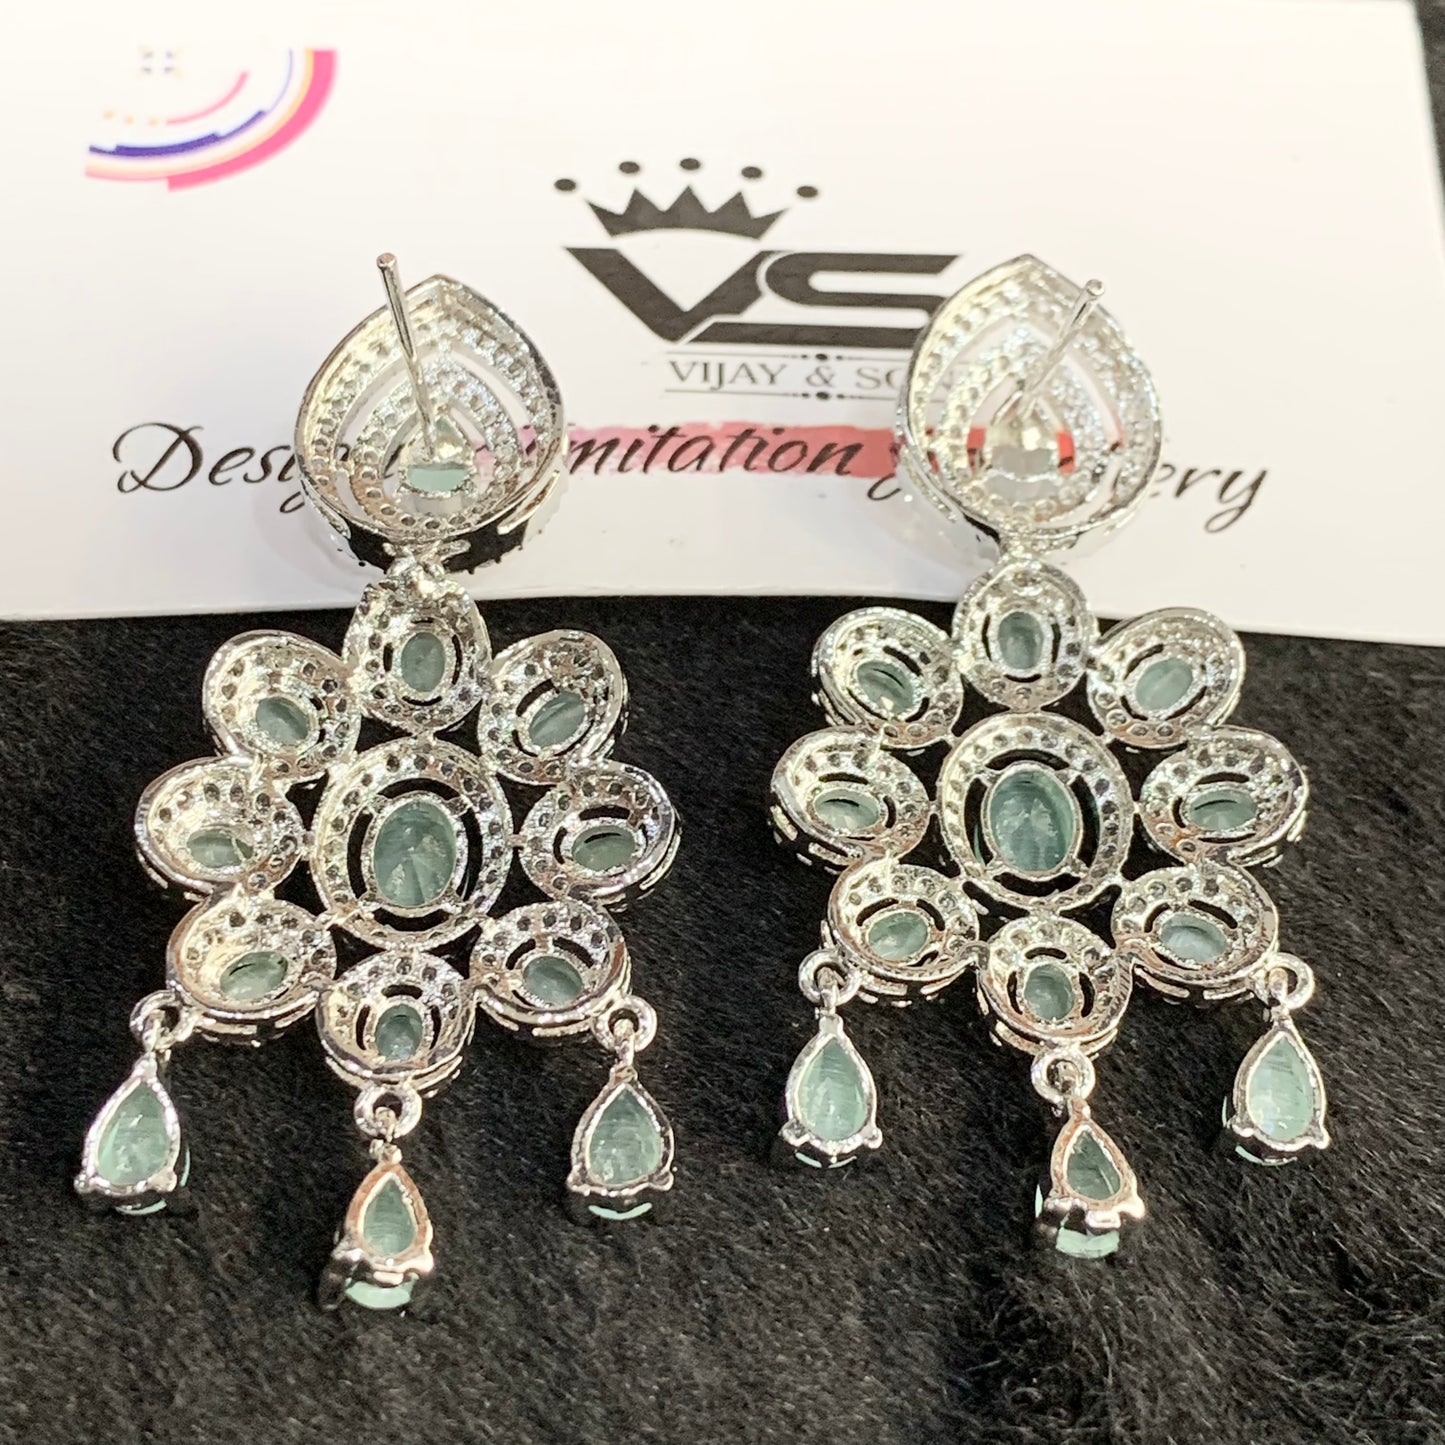 American diamond earrings 00987